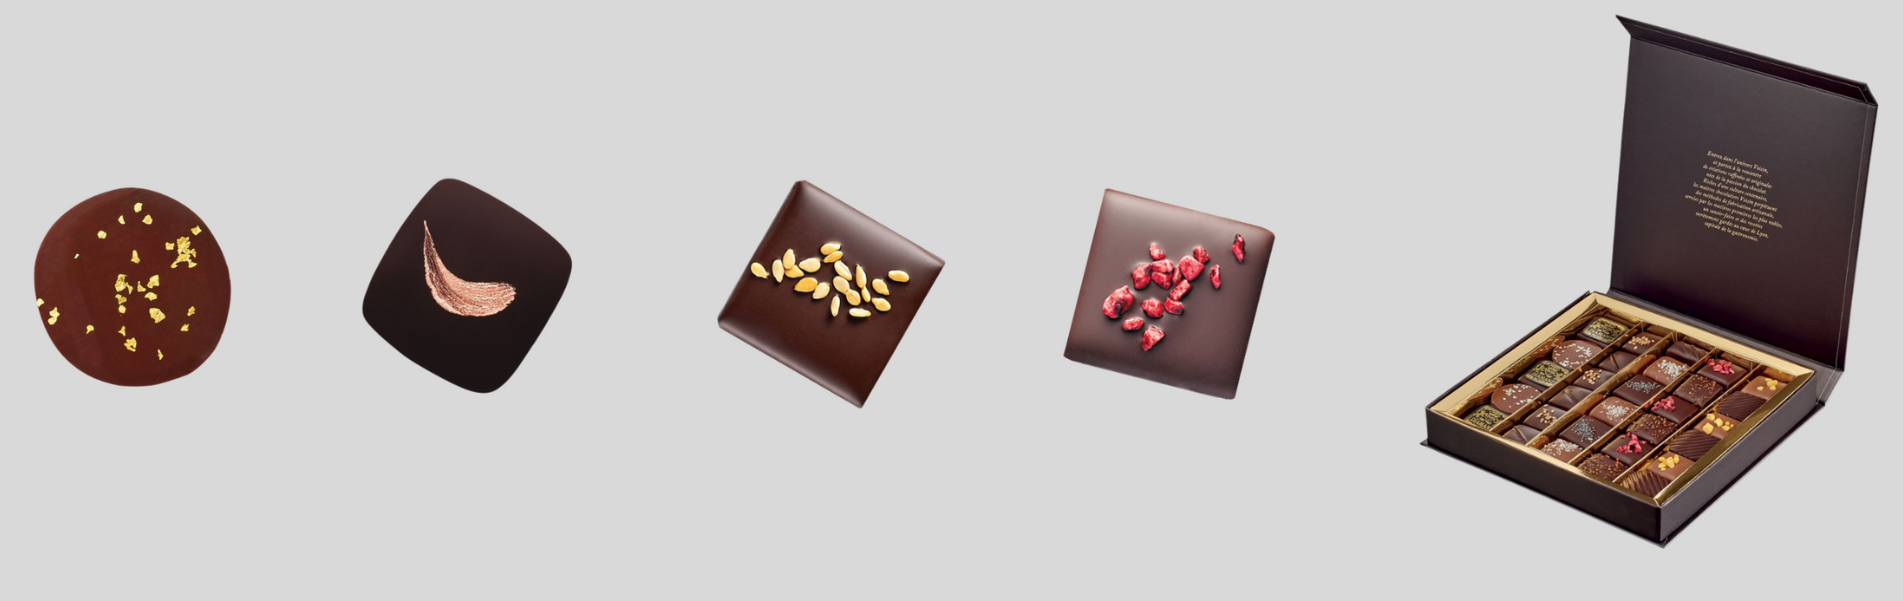 chocolats_banniere